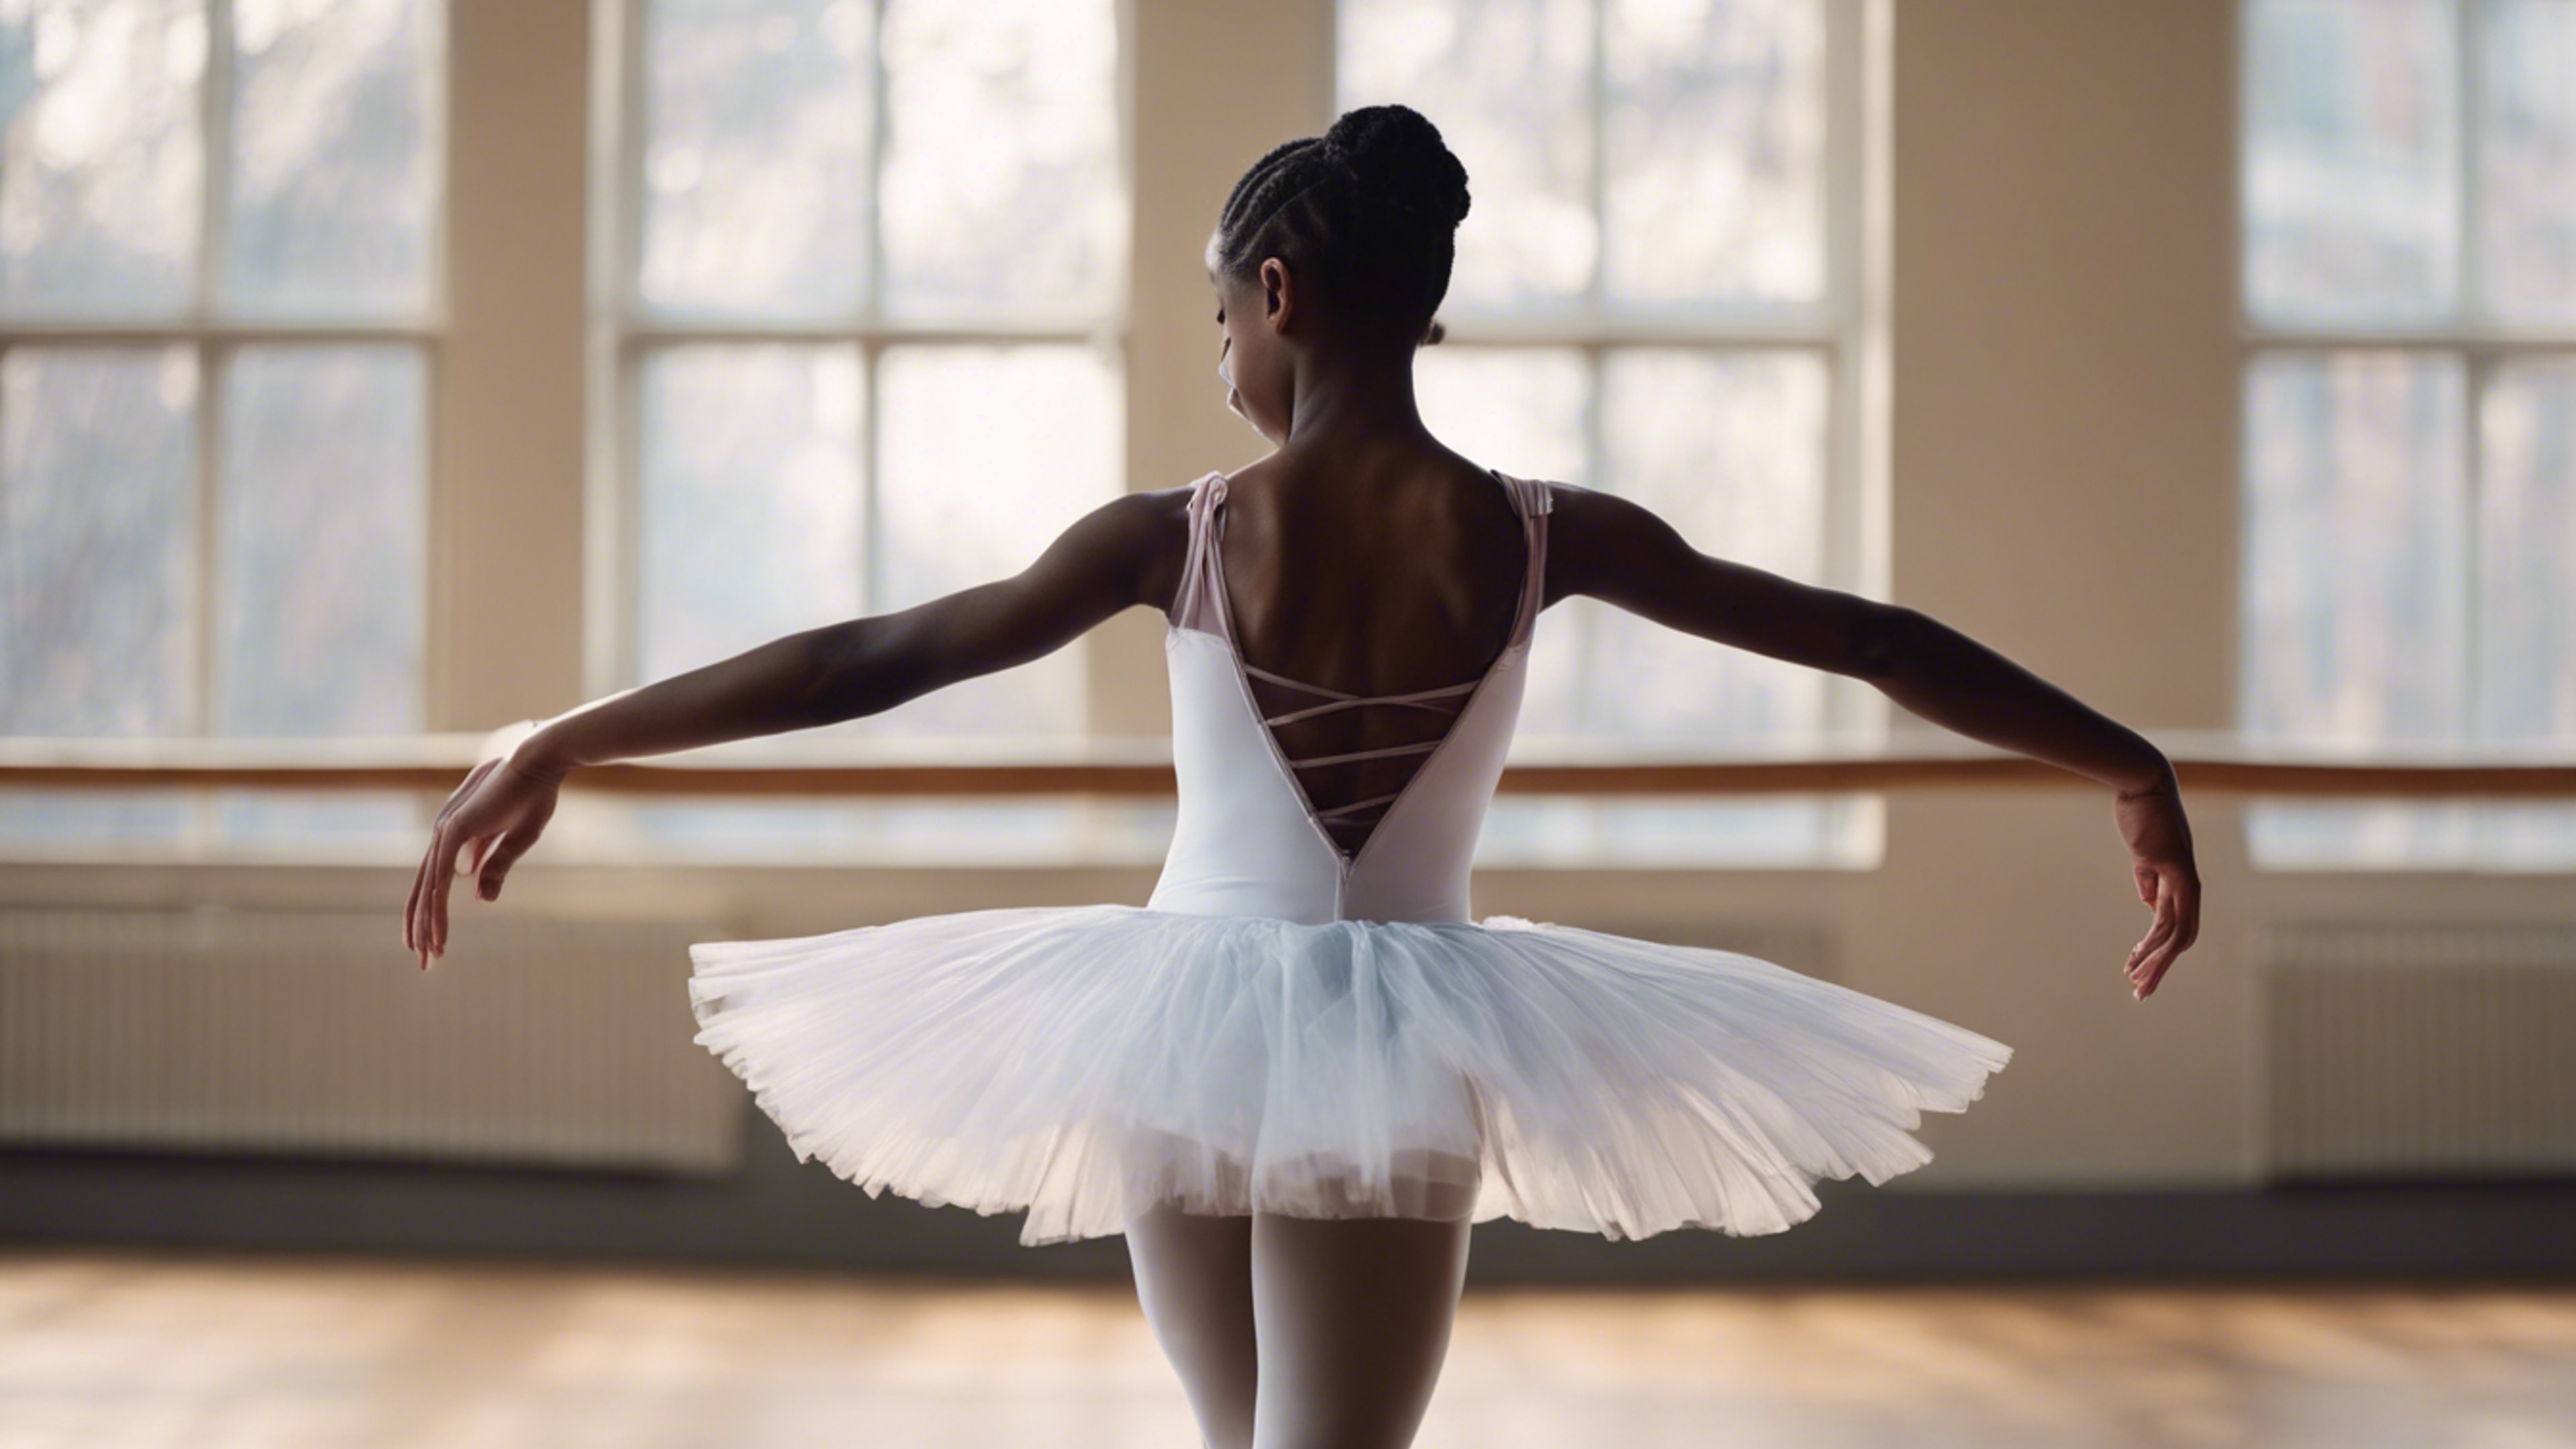 A young black girl practicing ballet in a beautiful satin tutu. Hình nền[c9fc18550cde4bfca1b8]